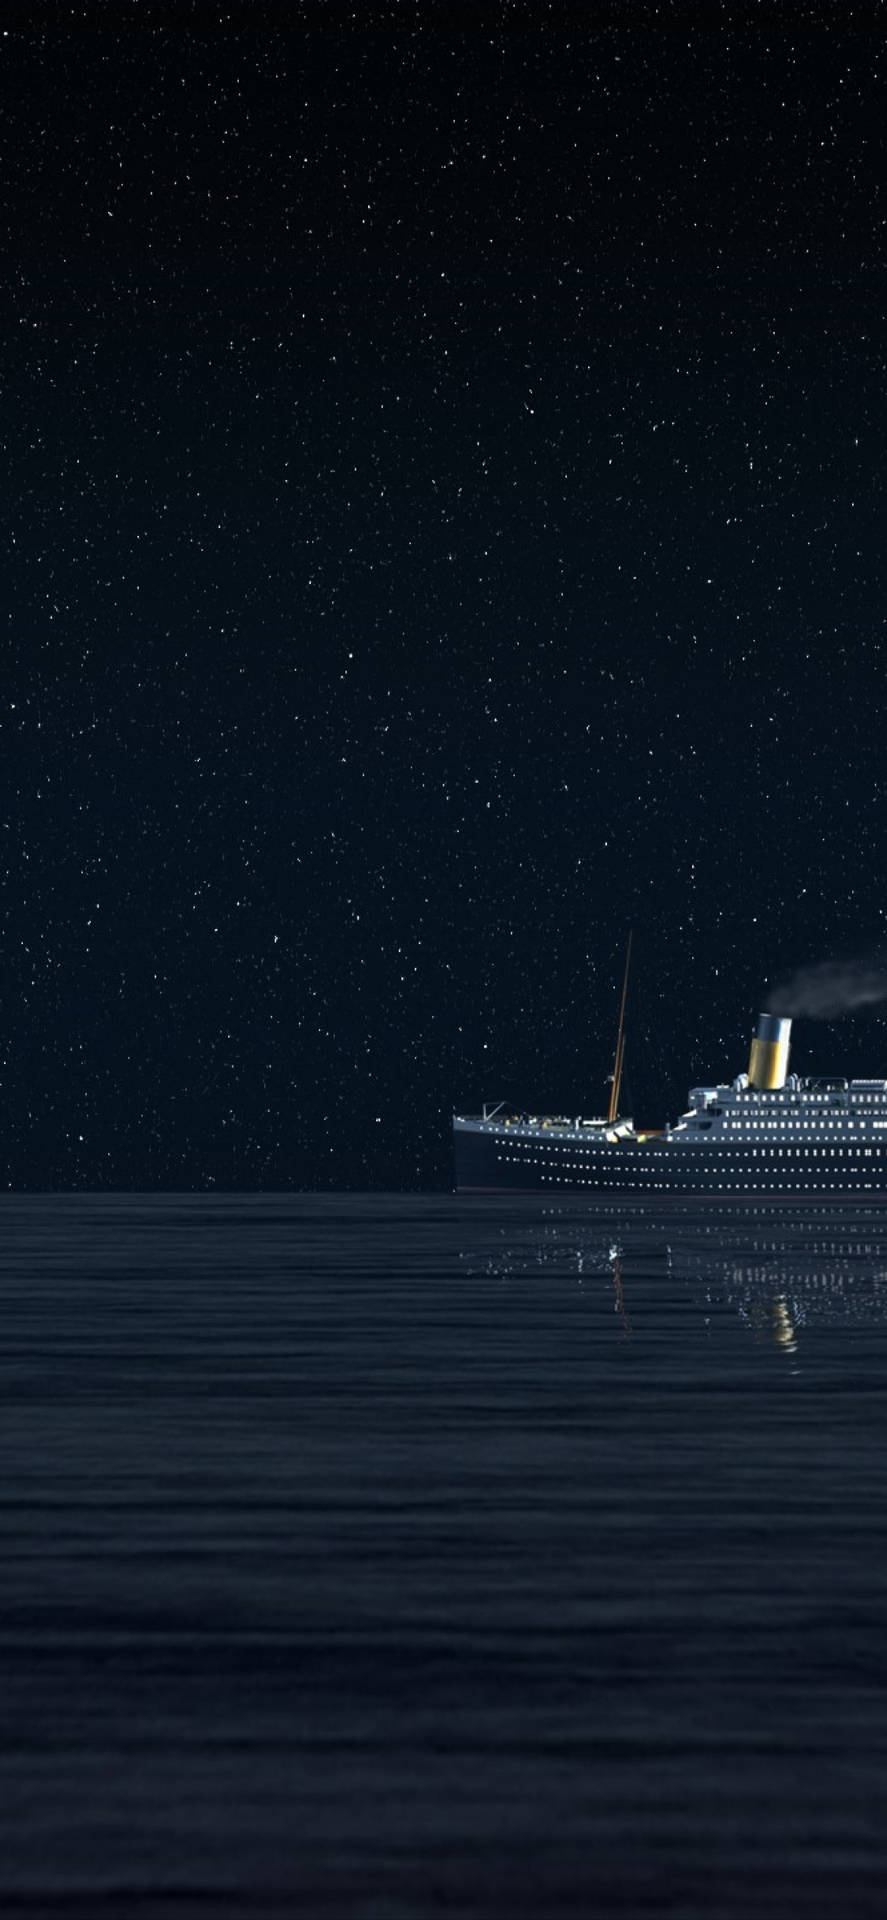 Titanic Starry Night